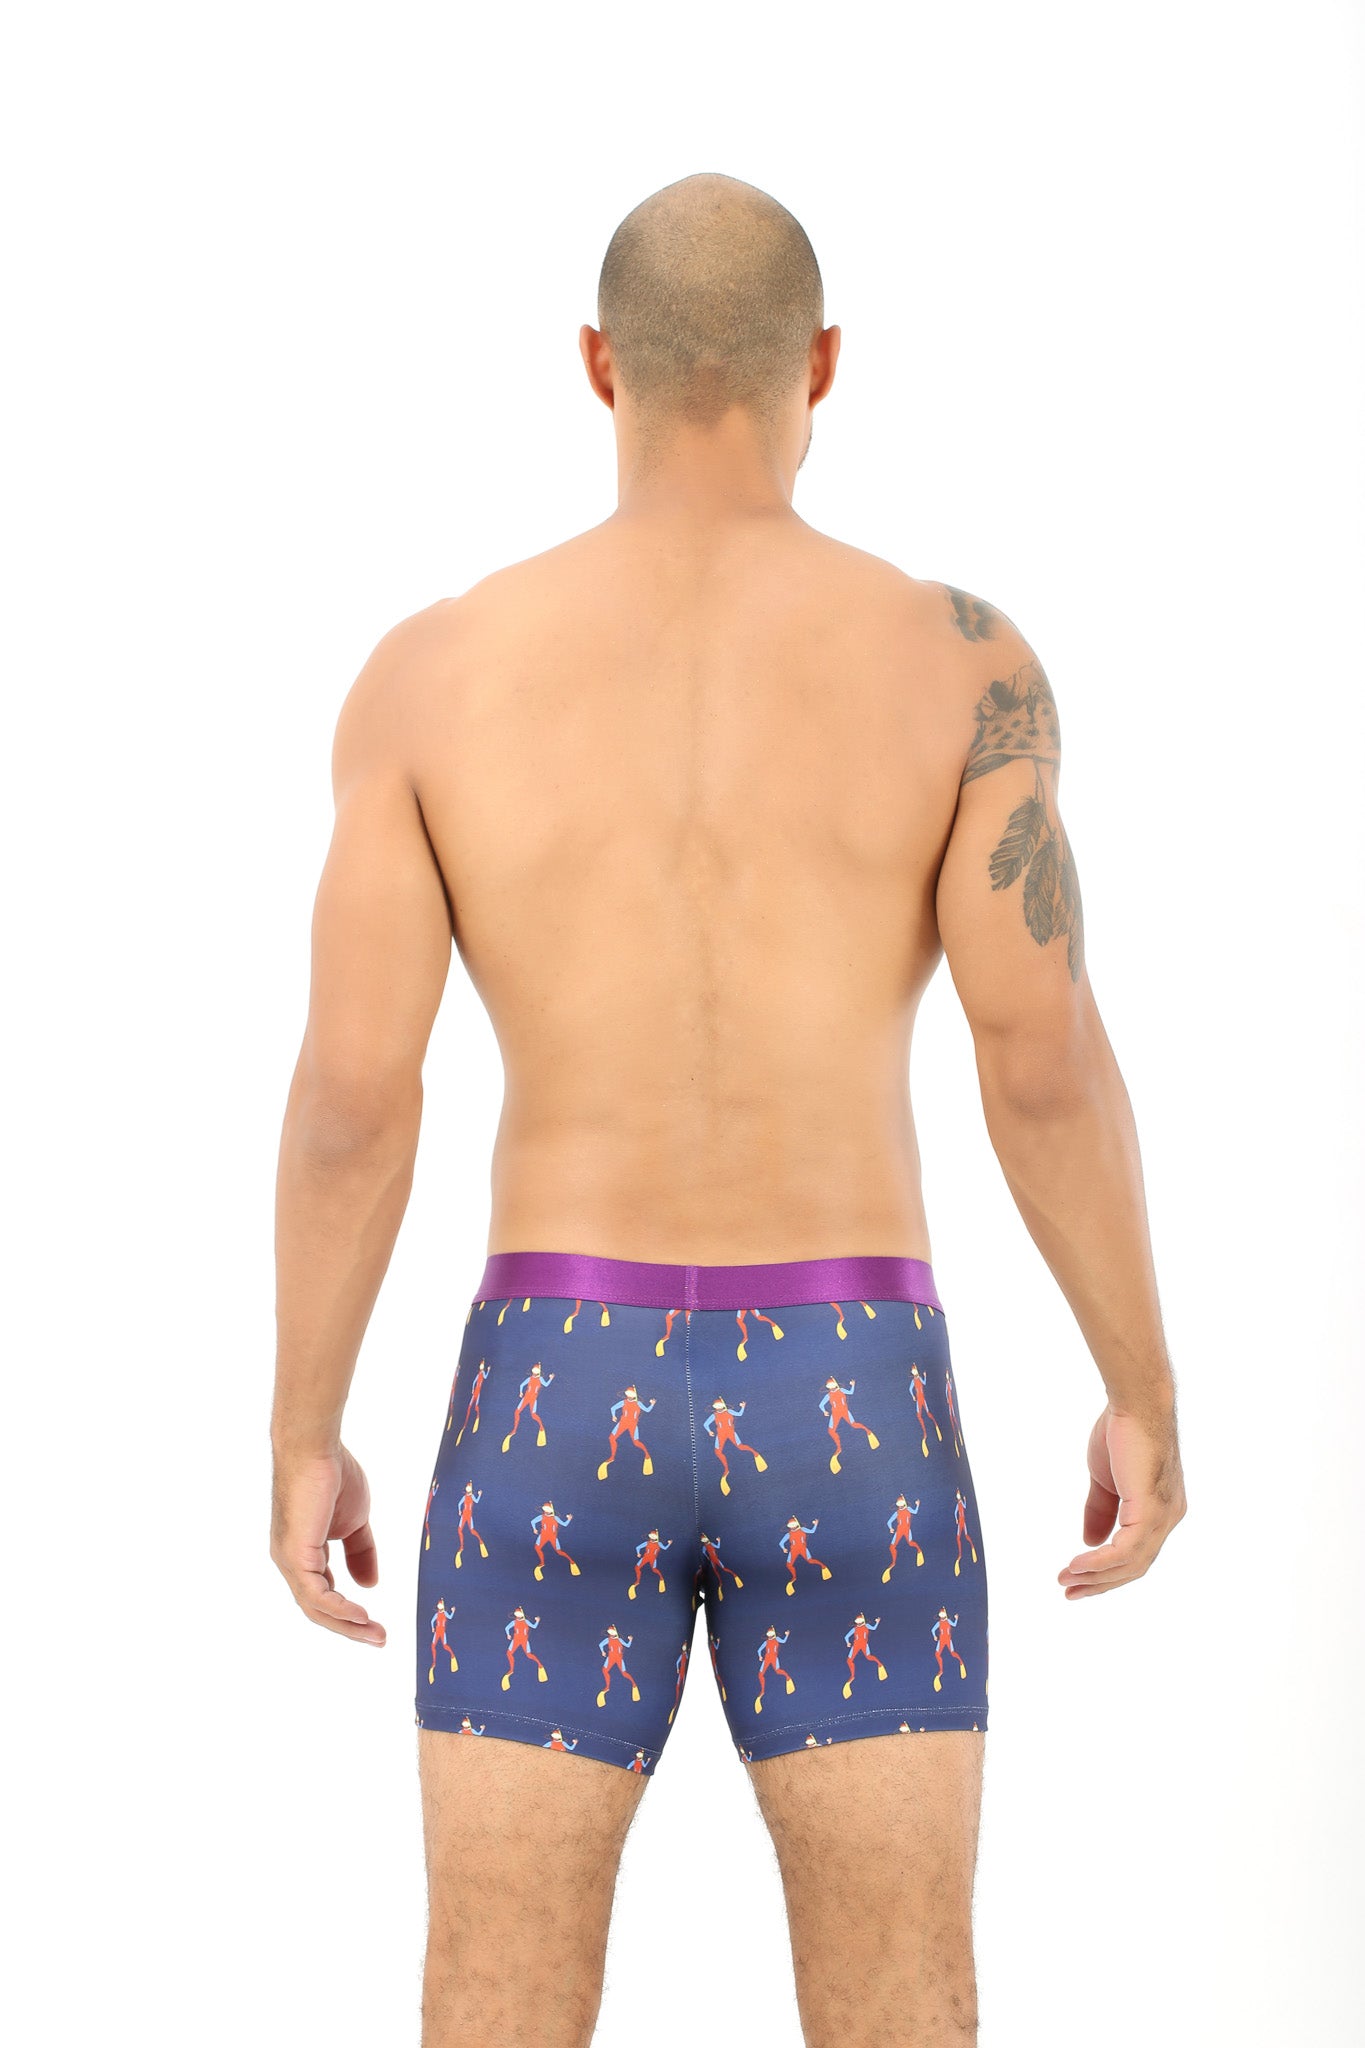 The back of a man wearing Scuba Diver Underwear.